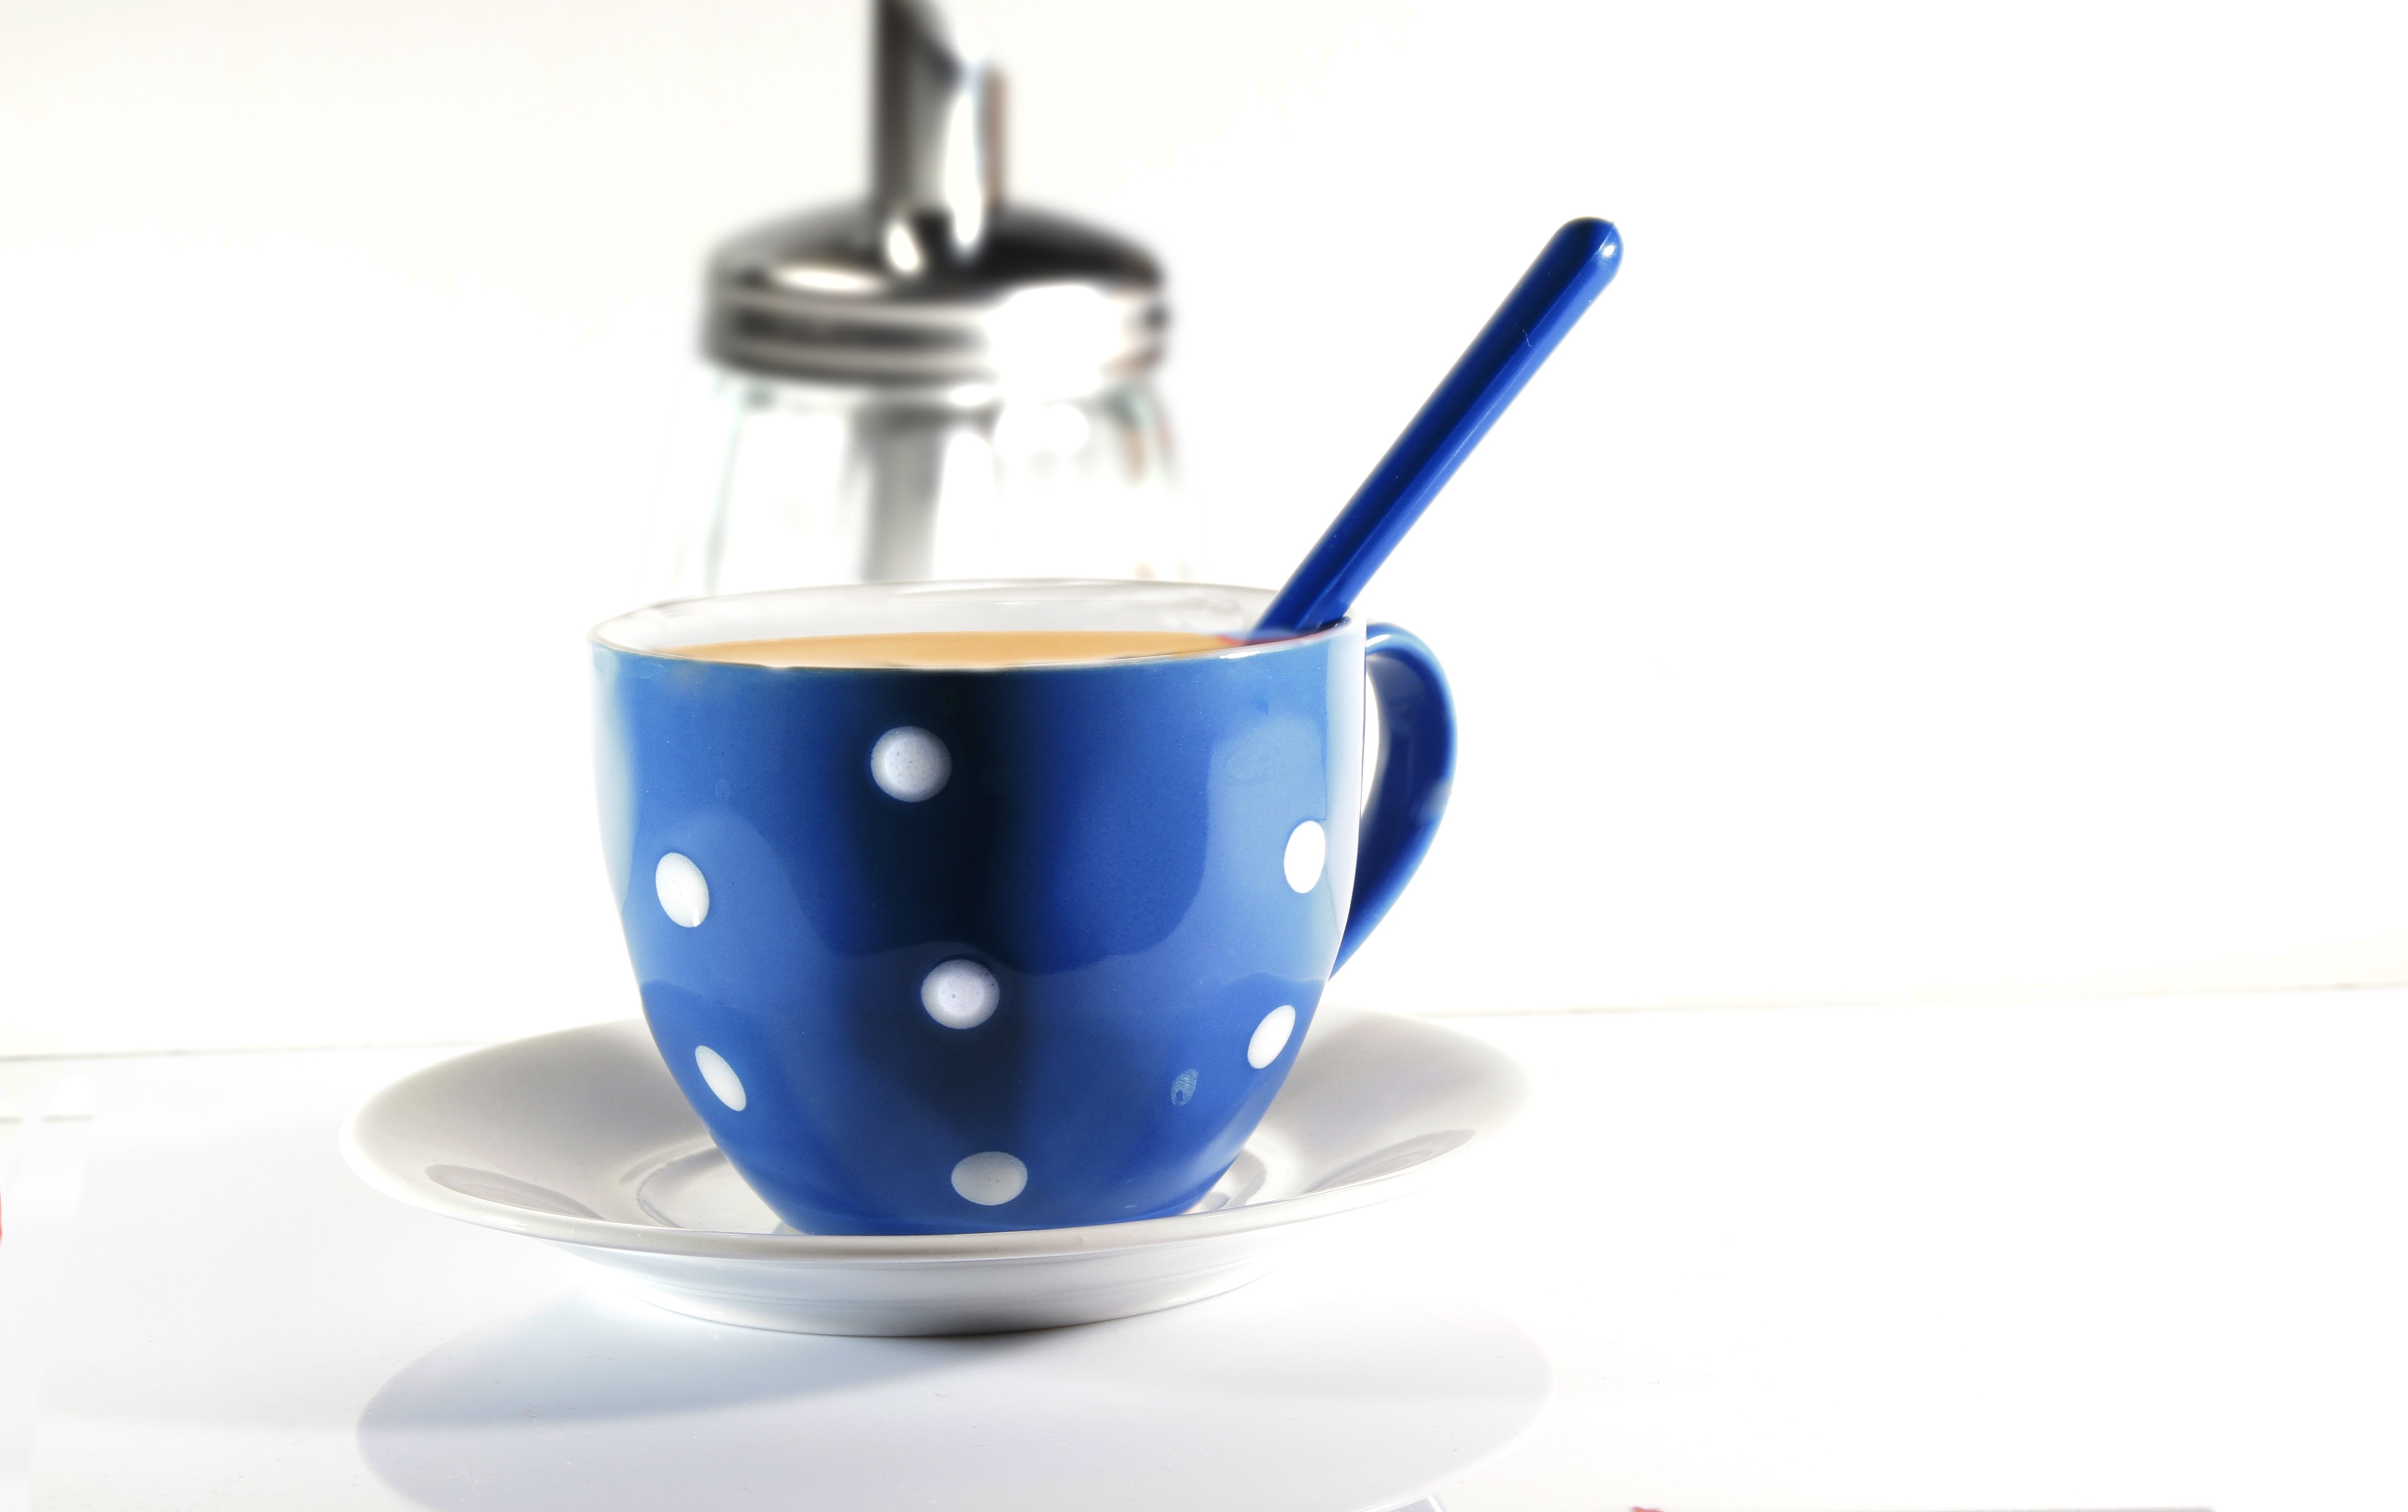 blue and white ceramic teacup set